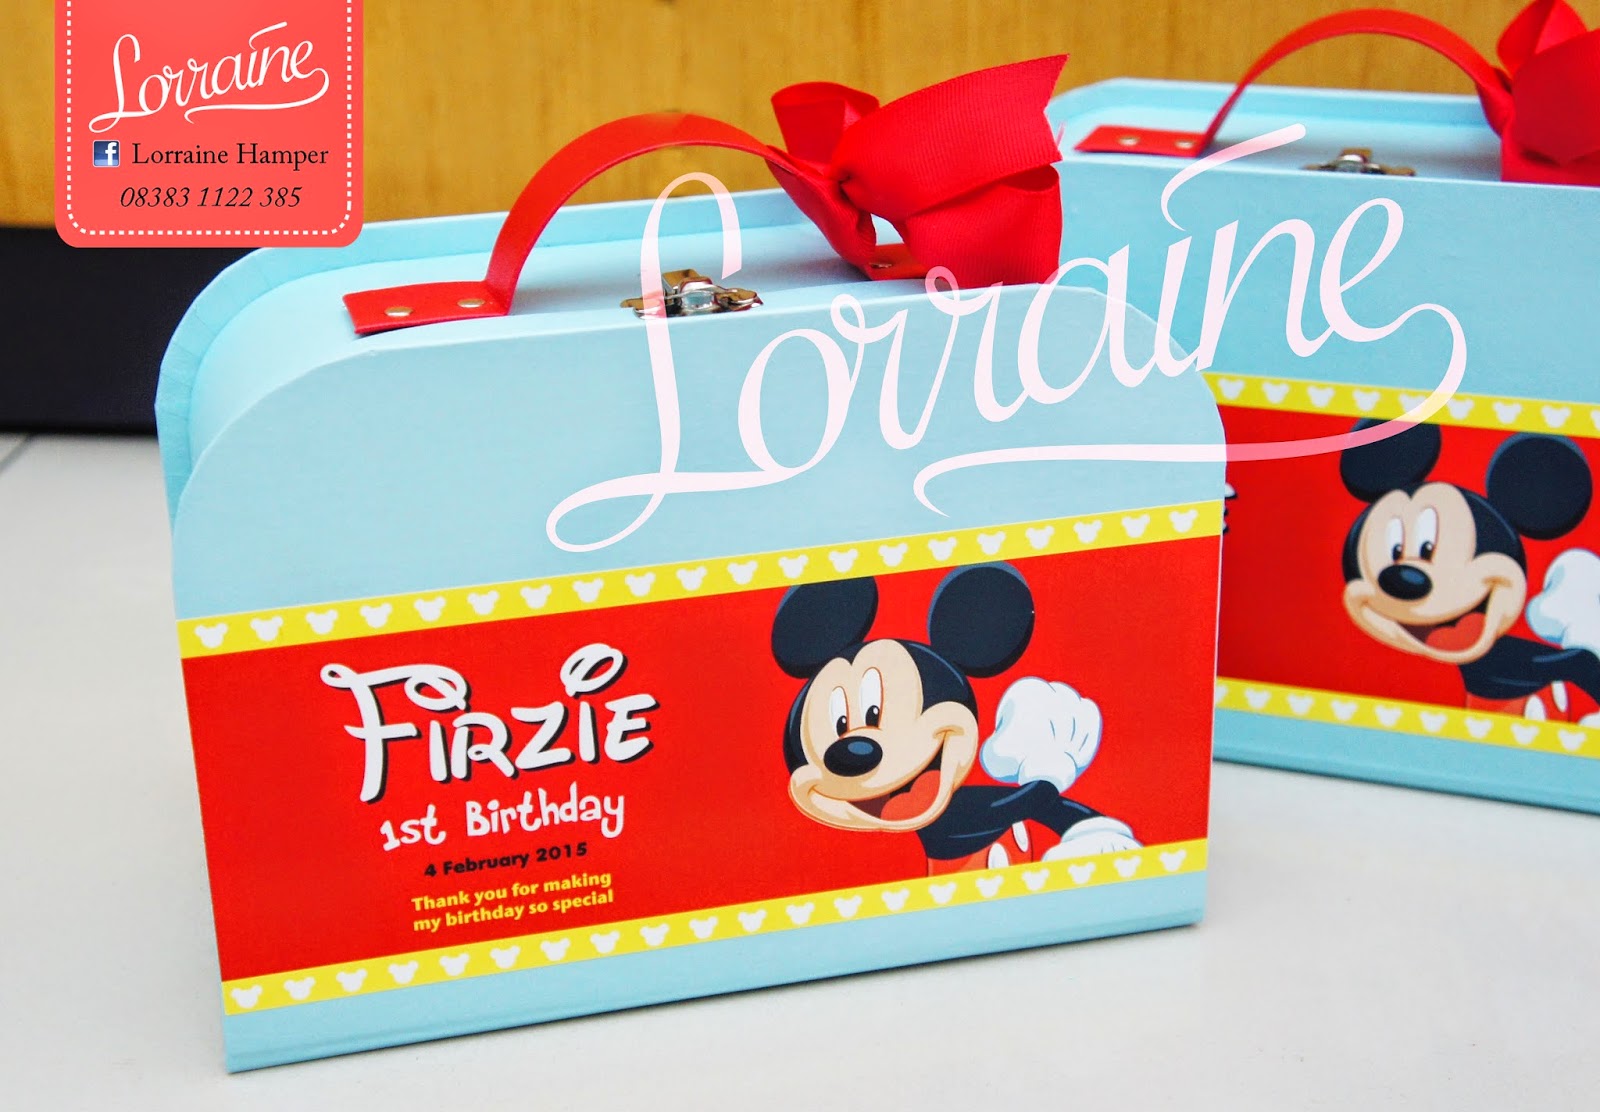 Firzie's Birthday – Mickey Mouse  Lorraine Souvenir & Hamper